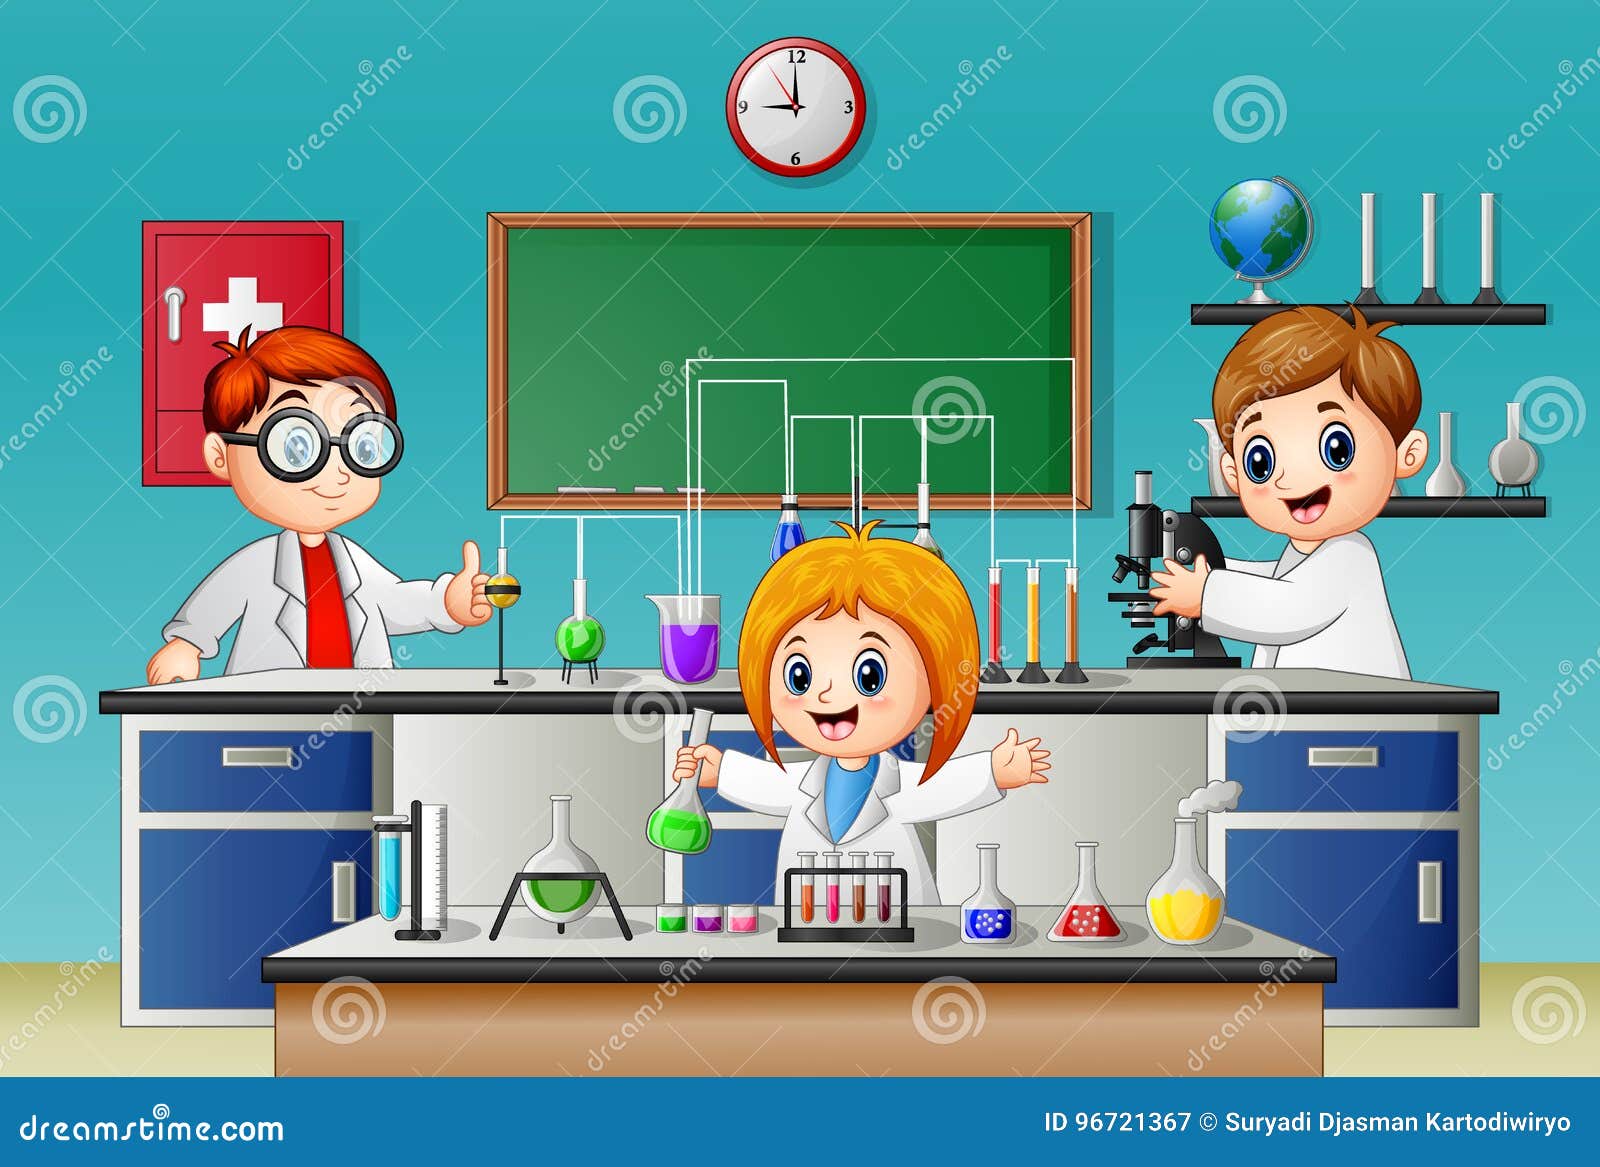 science lab cartoon